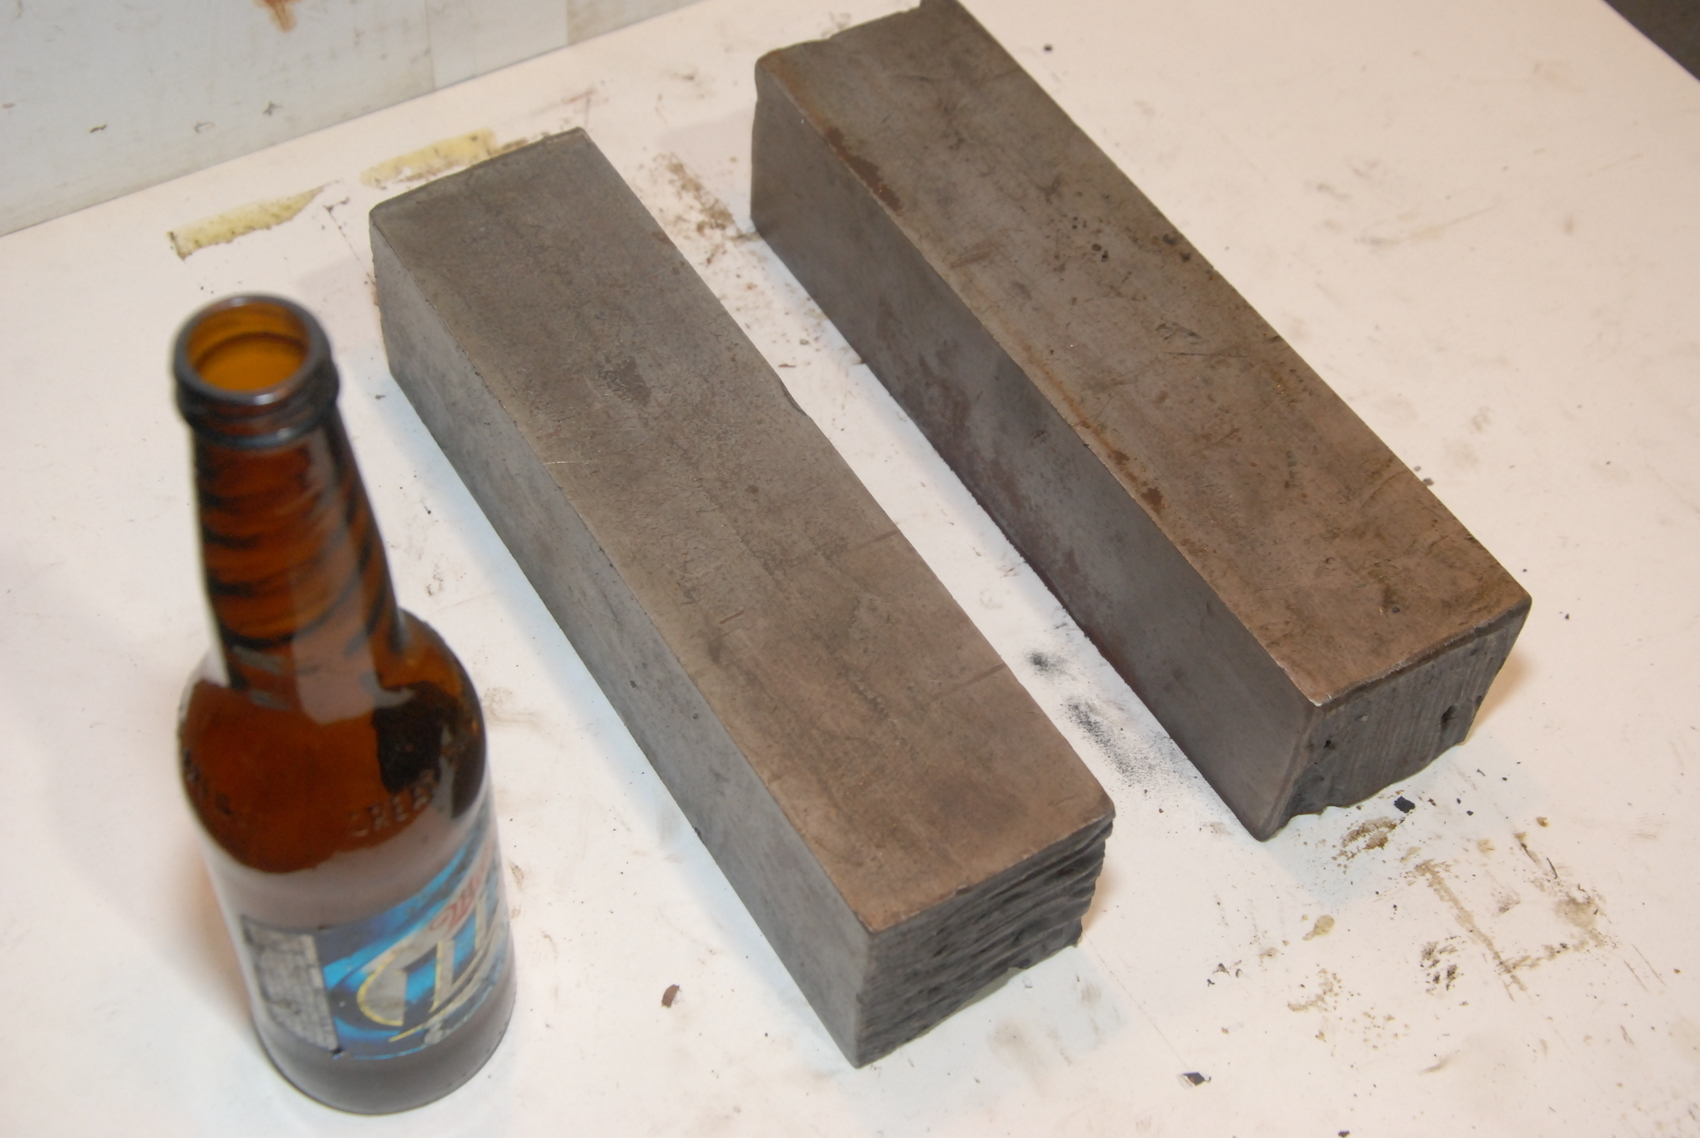 Lot of 2 steel Rectangular Bar for blacksmith anvil,10*2.5*2.5,40lbs